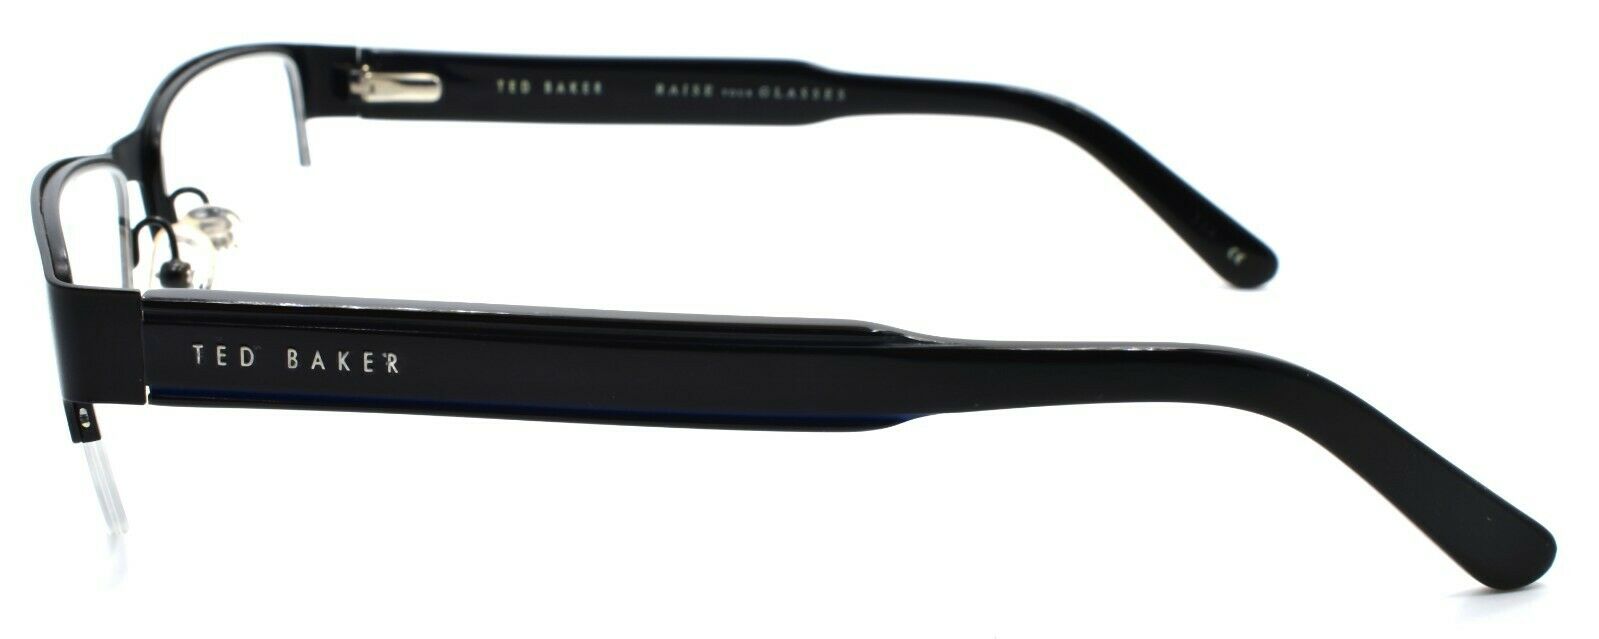 3-Ted Baker Capital 4213 001 Men's Eyeglasses Frames Half-rim 52-17-140 Black-4894327031702-IKSpecs